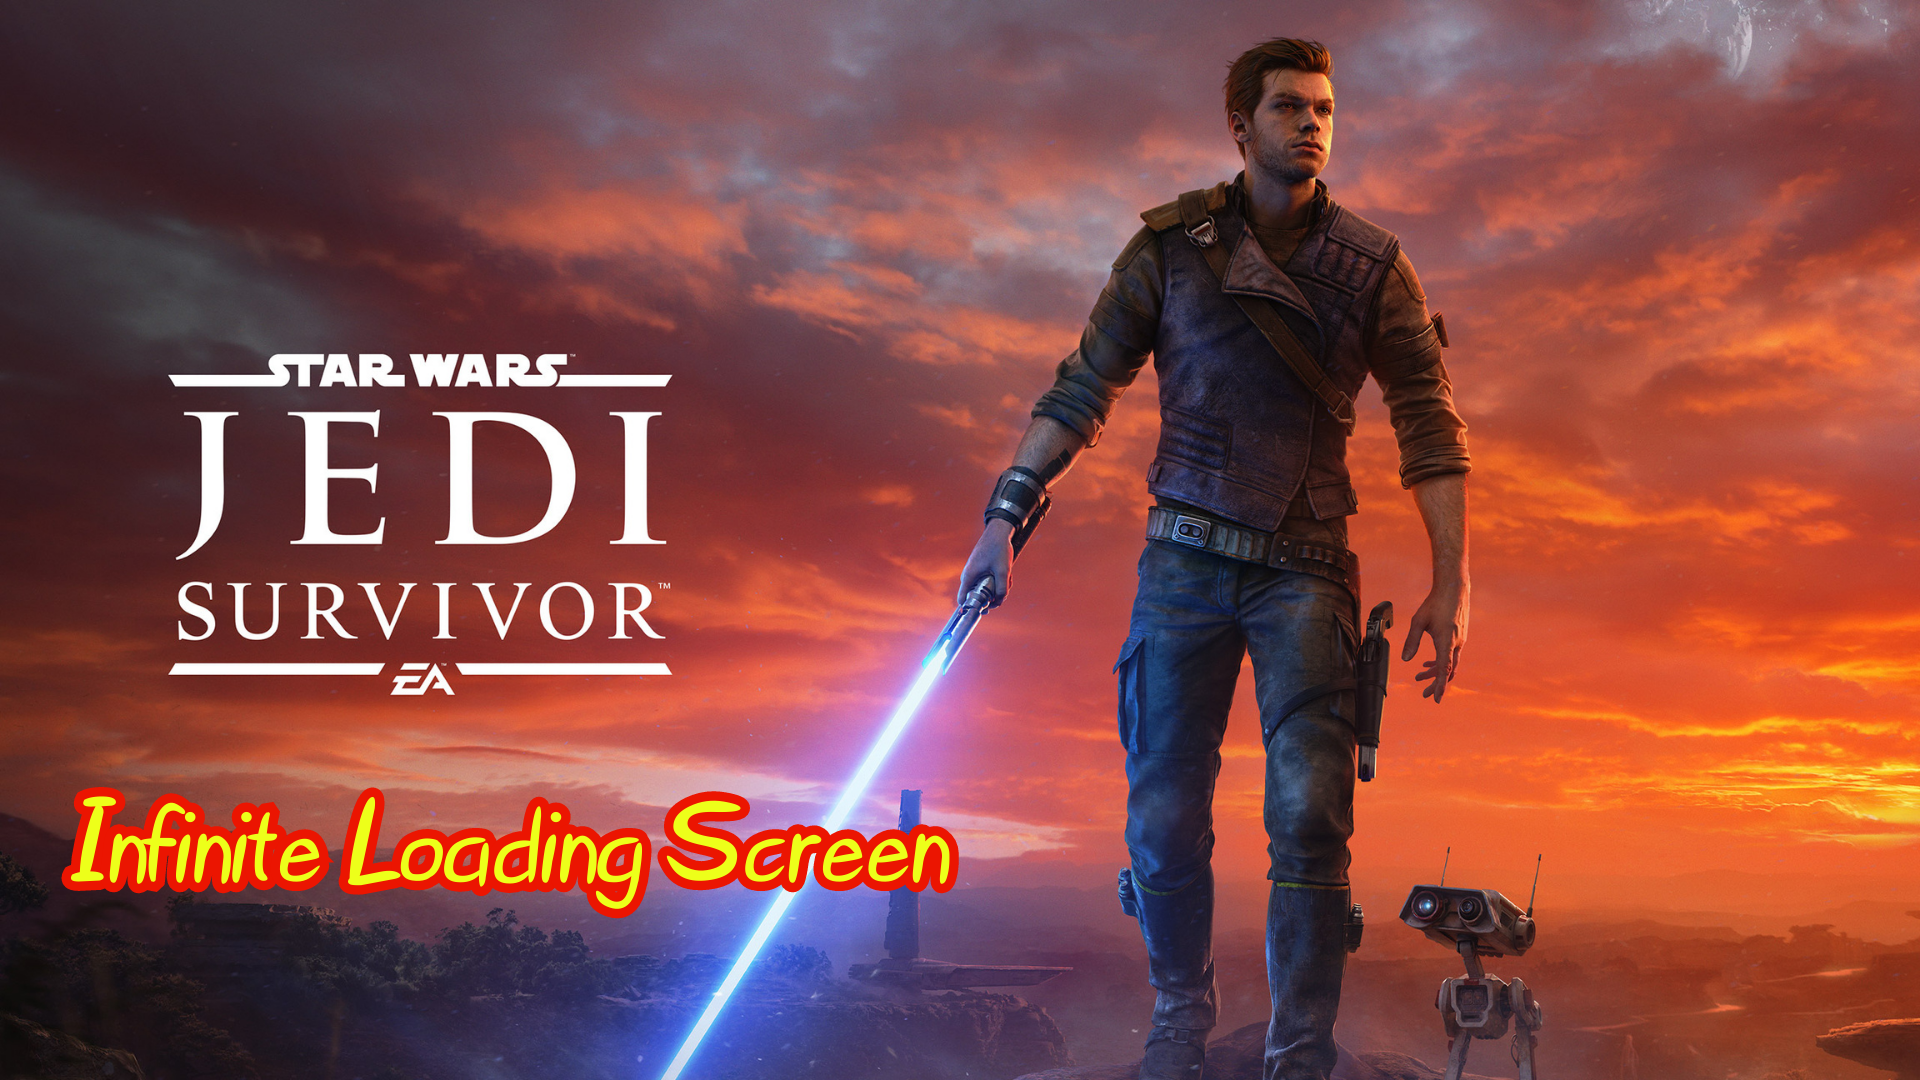 Star Wars Jedi Survivor Infinite Loading Screen issue